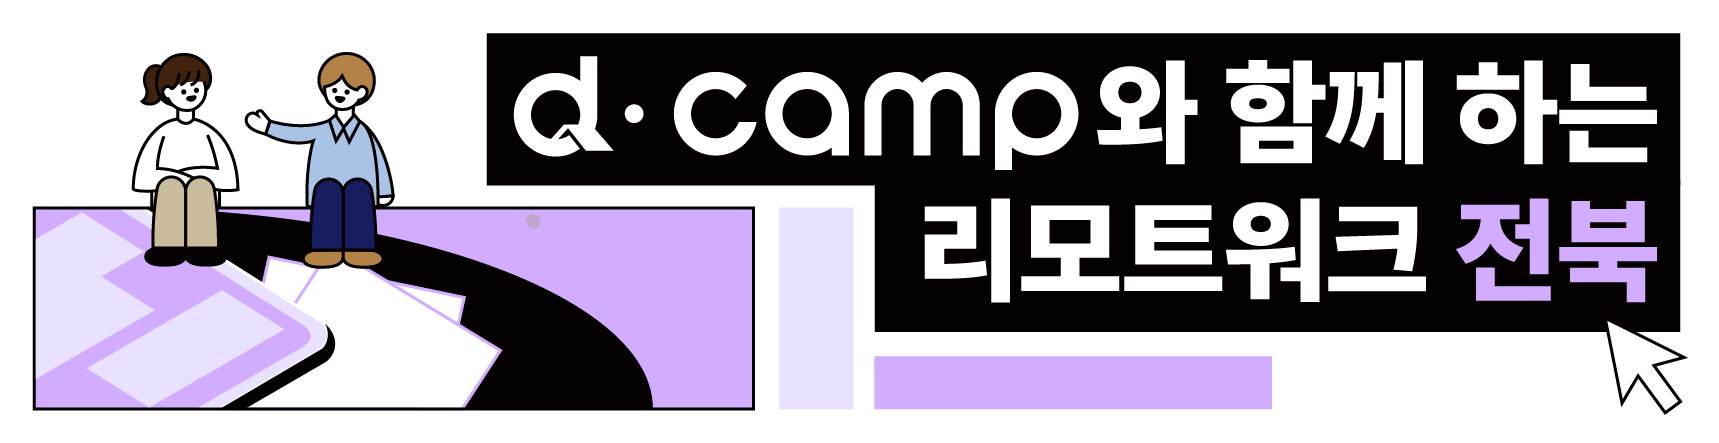 [d·camp] 헤더_8월 전북 리모트워크